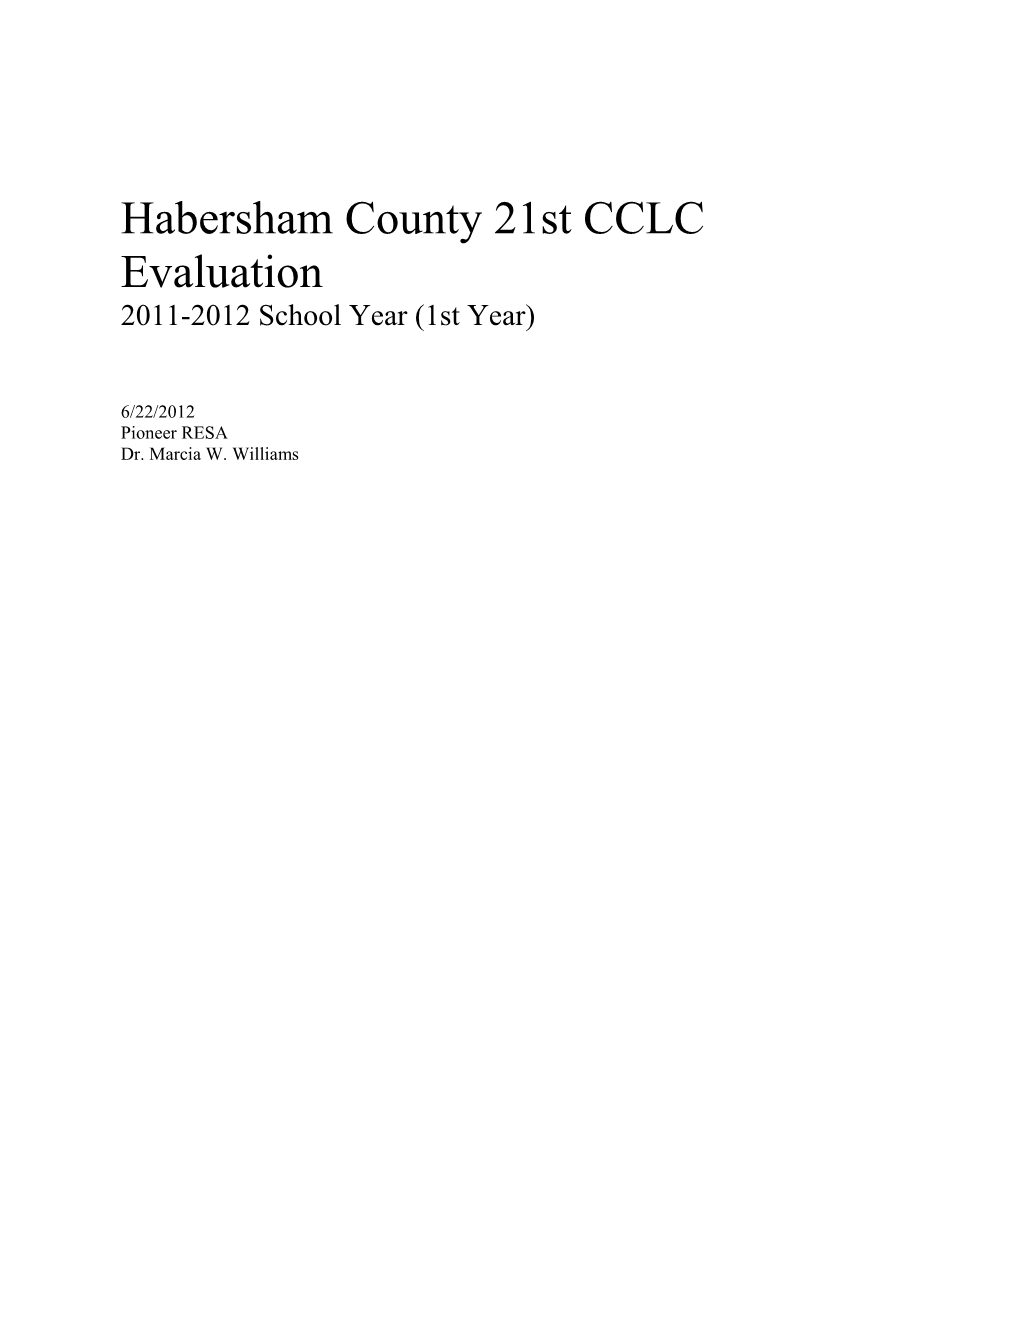 Habersham County 21St CCLC Evaluation